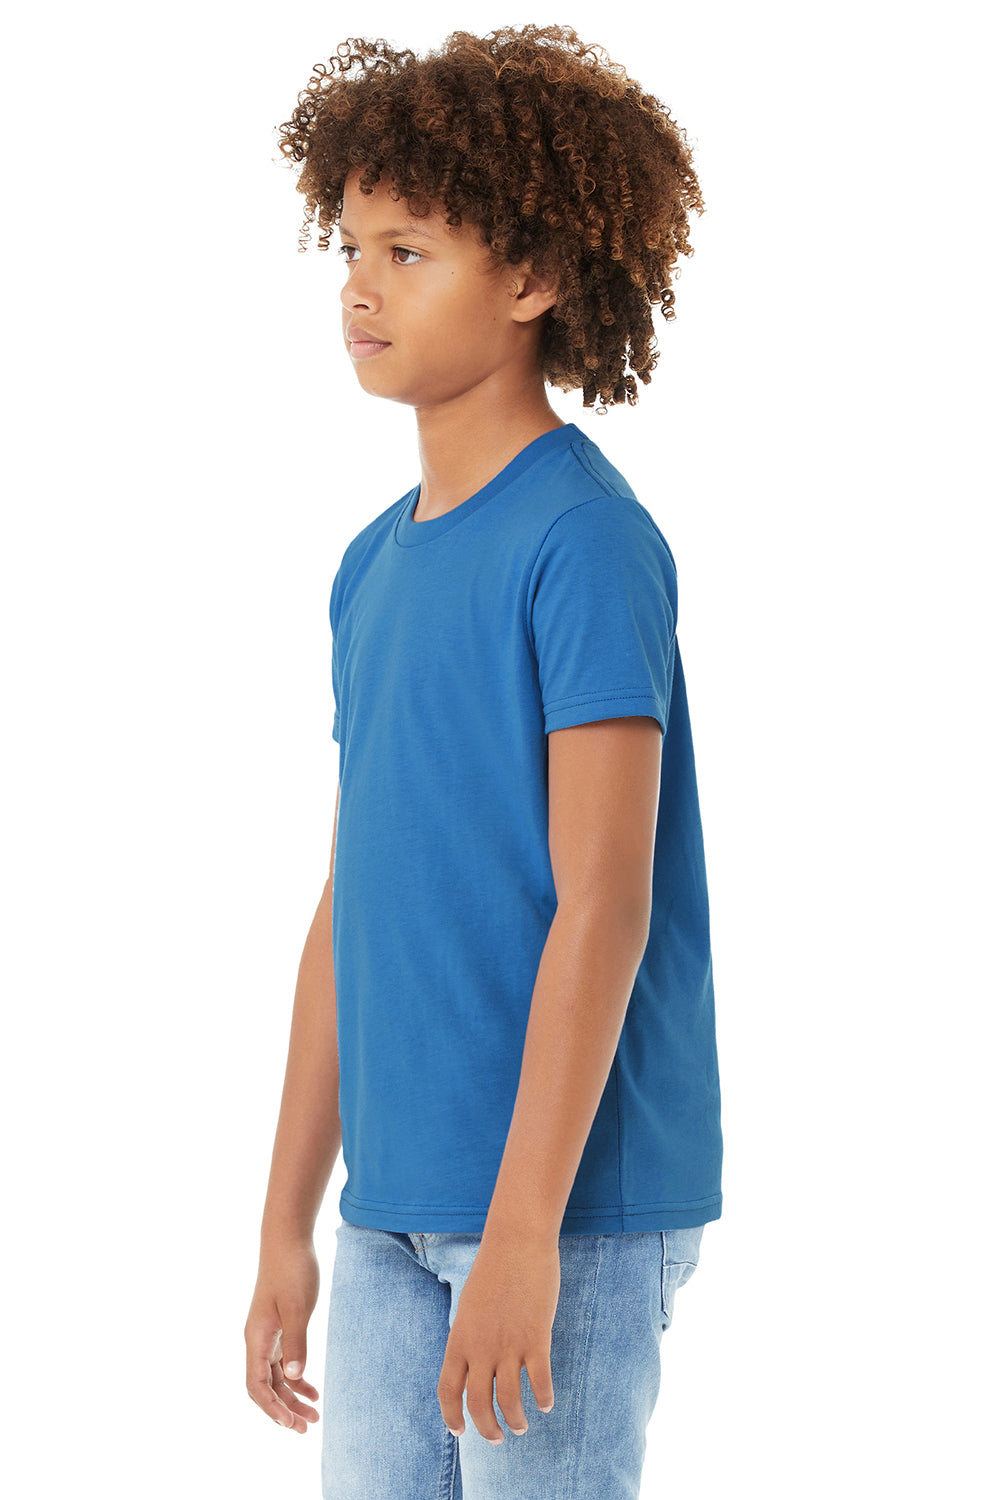 Bella + Canvas 3001Y Youth Jersey Short Sleeve Crewneck T-Shirt Columbia Blue Model 3Q